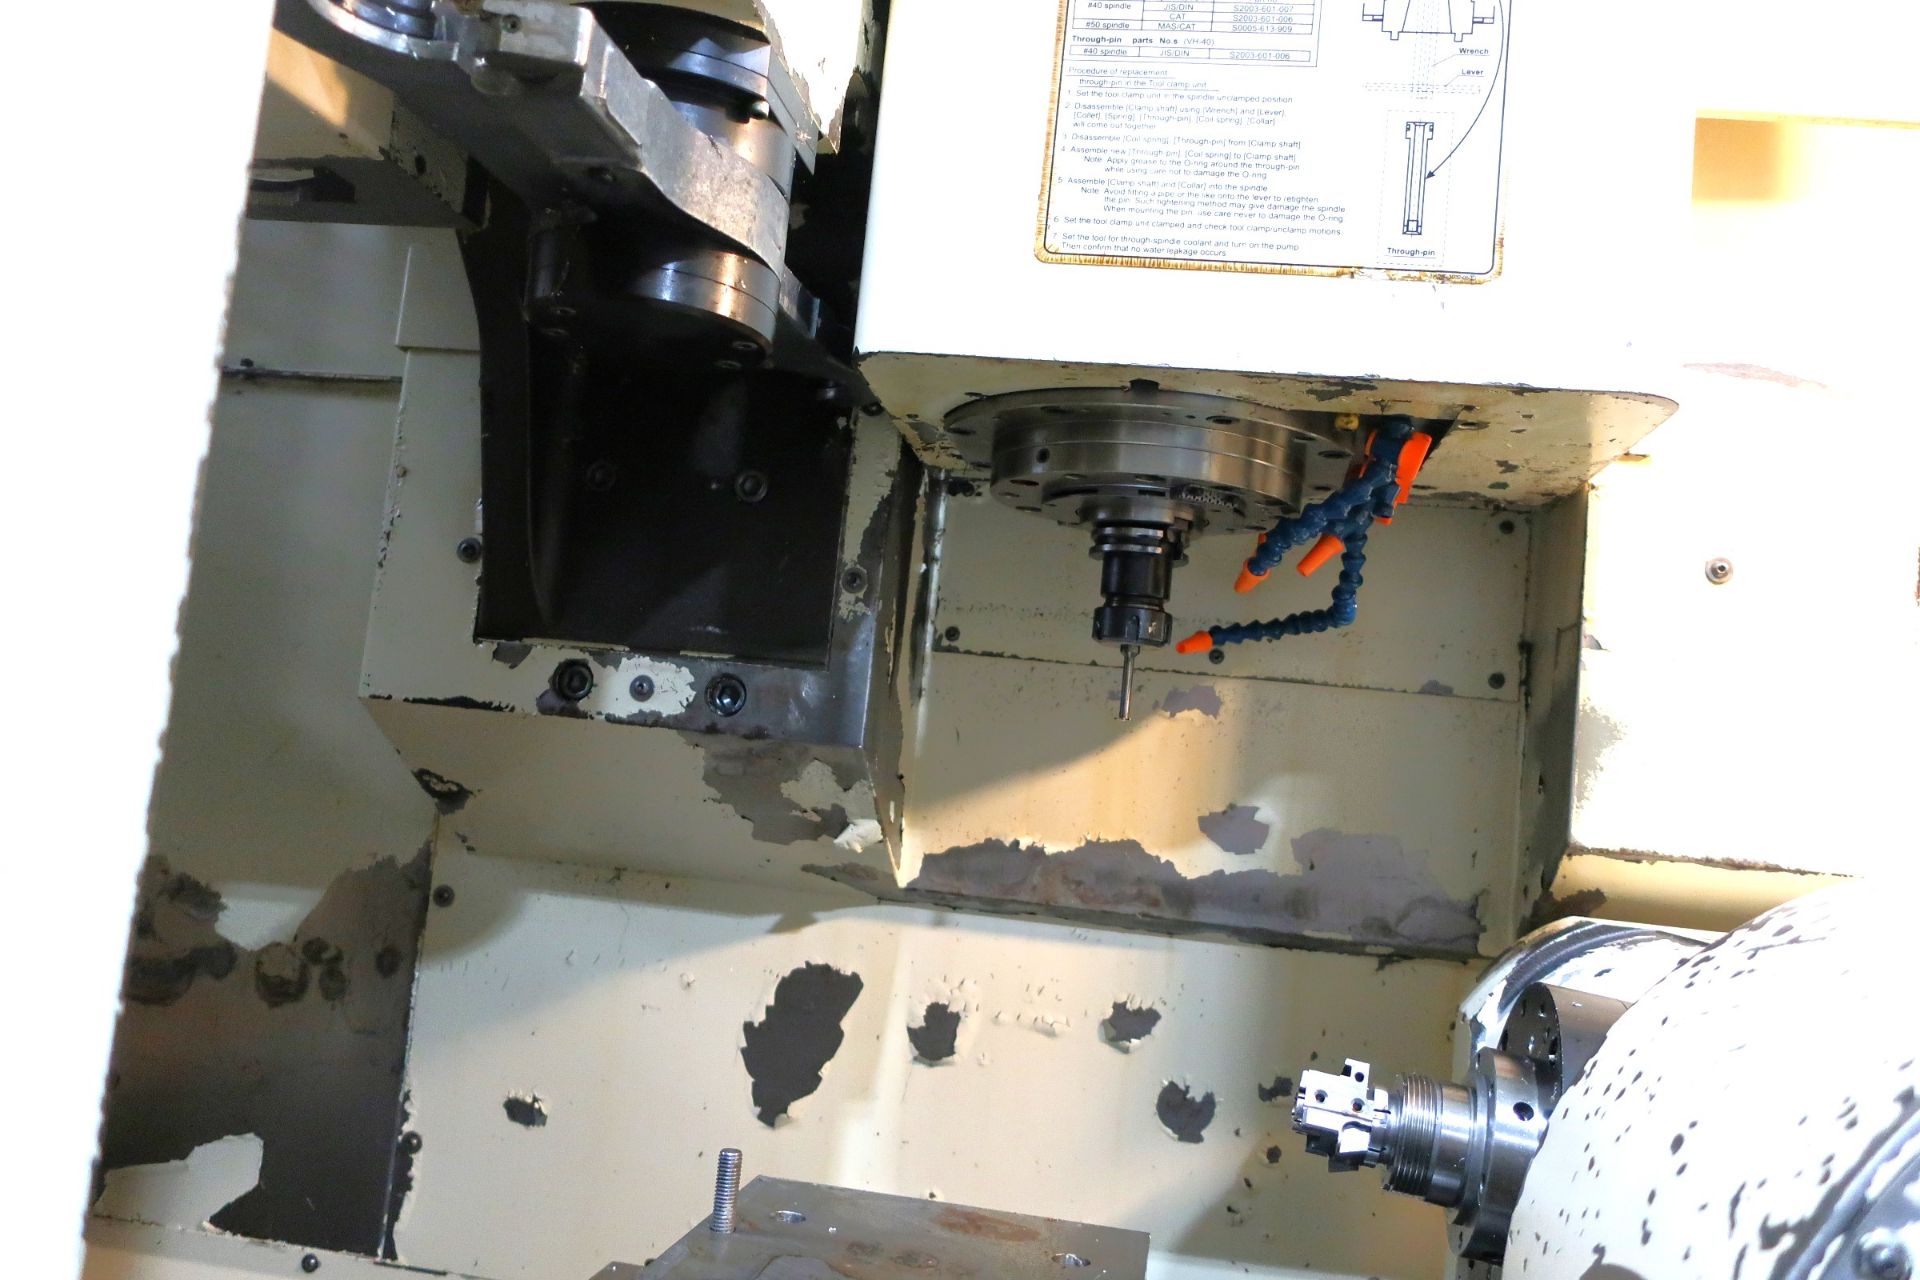 Okuma MC-V3016 5-Axis CNC Vertical Machining Center, S/N 0038, New 2003 - Image 9 of 19